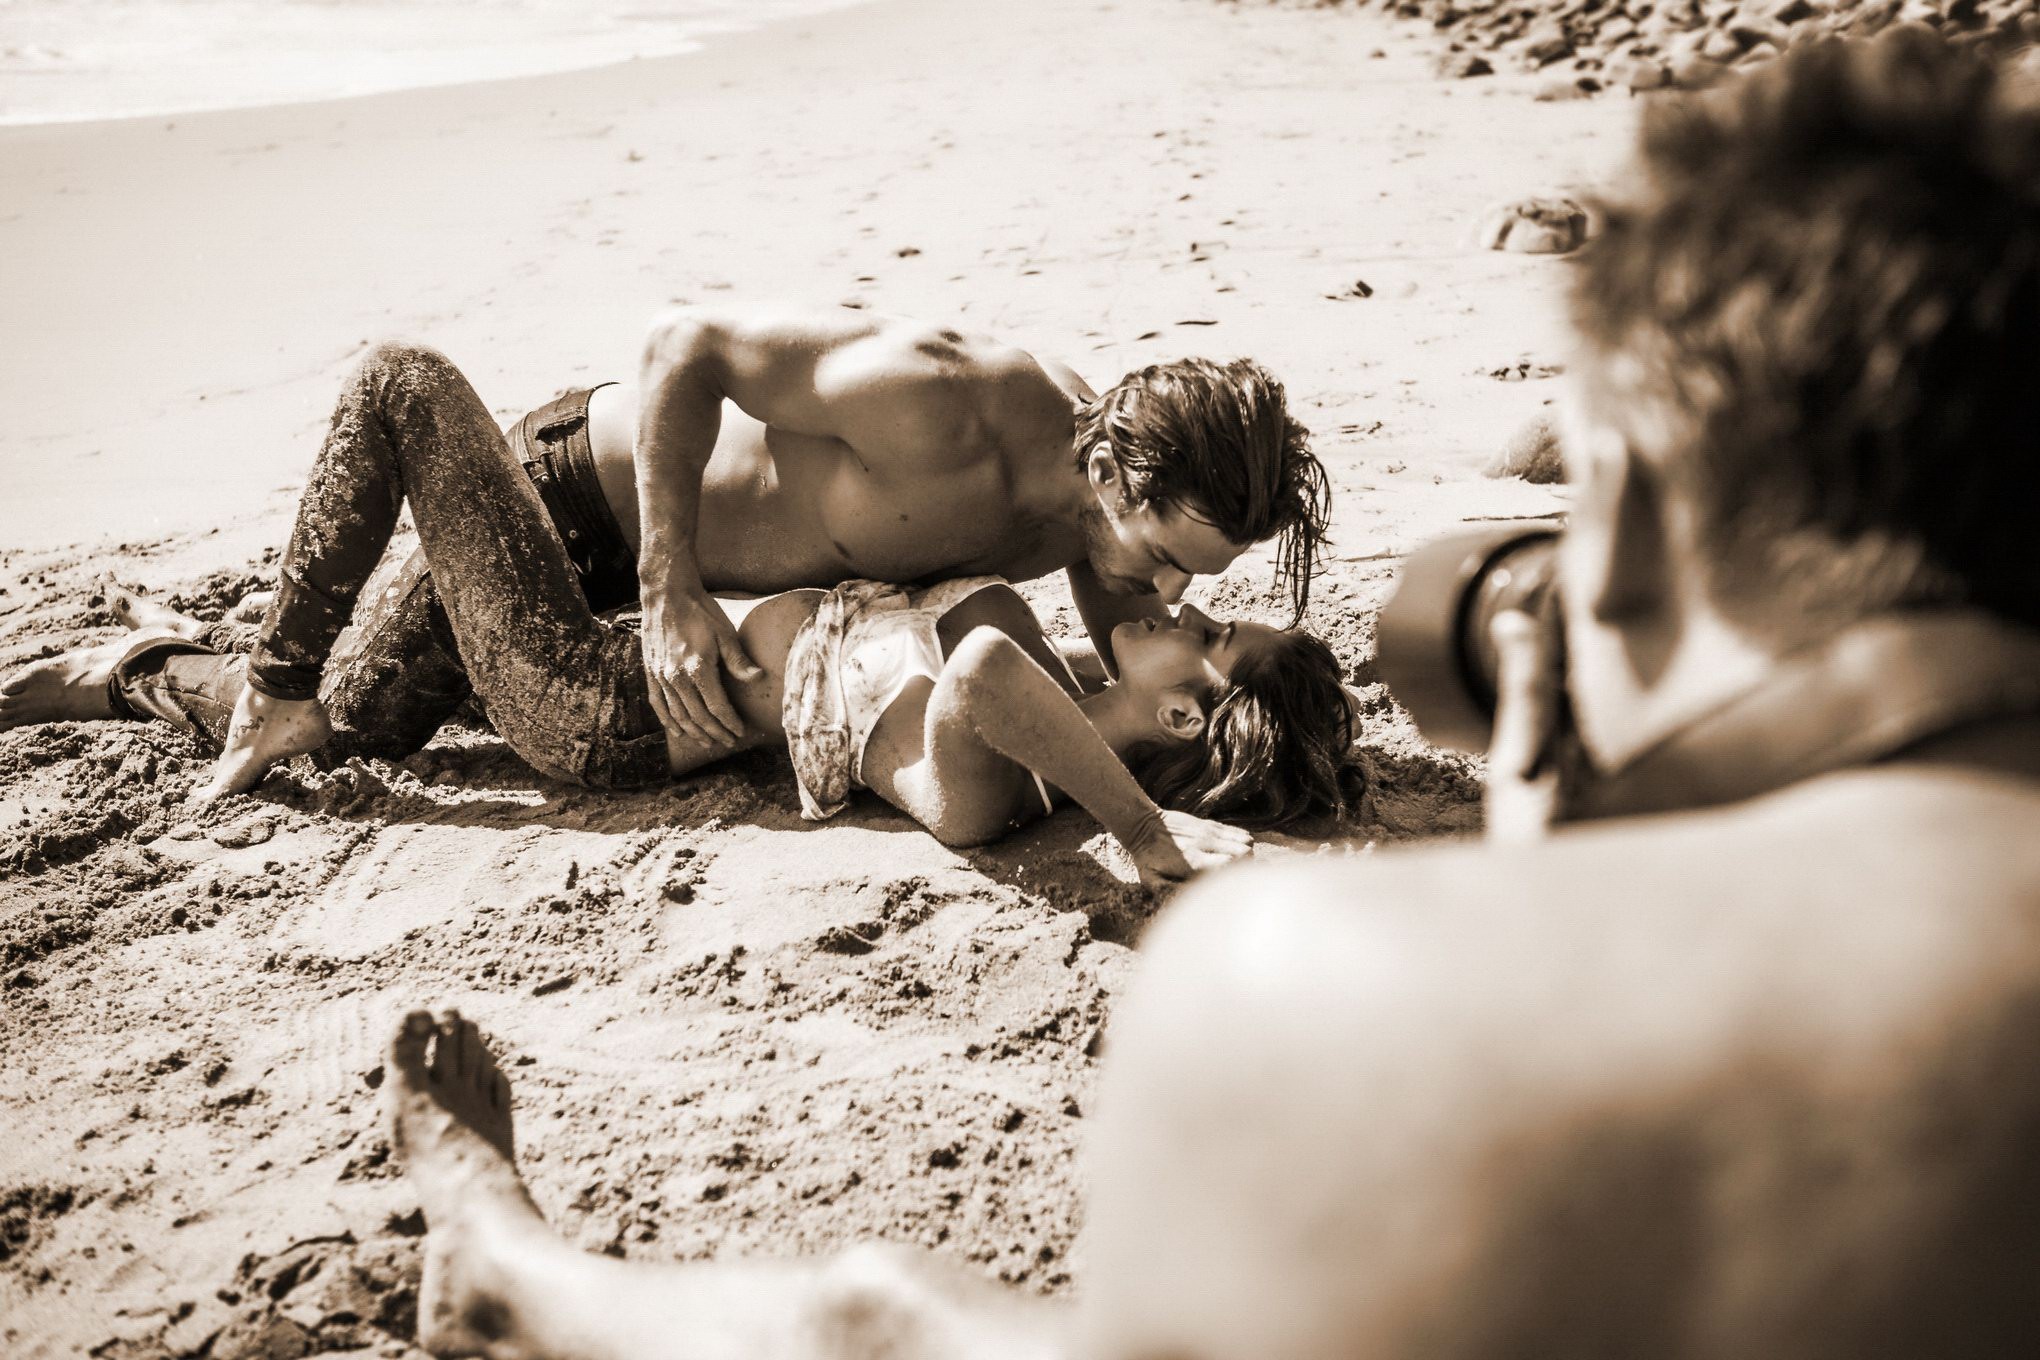 Jehane gigi paris completamente nudo petting al photoshoot spiaggia da steve shaw
 #75181061